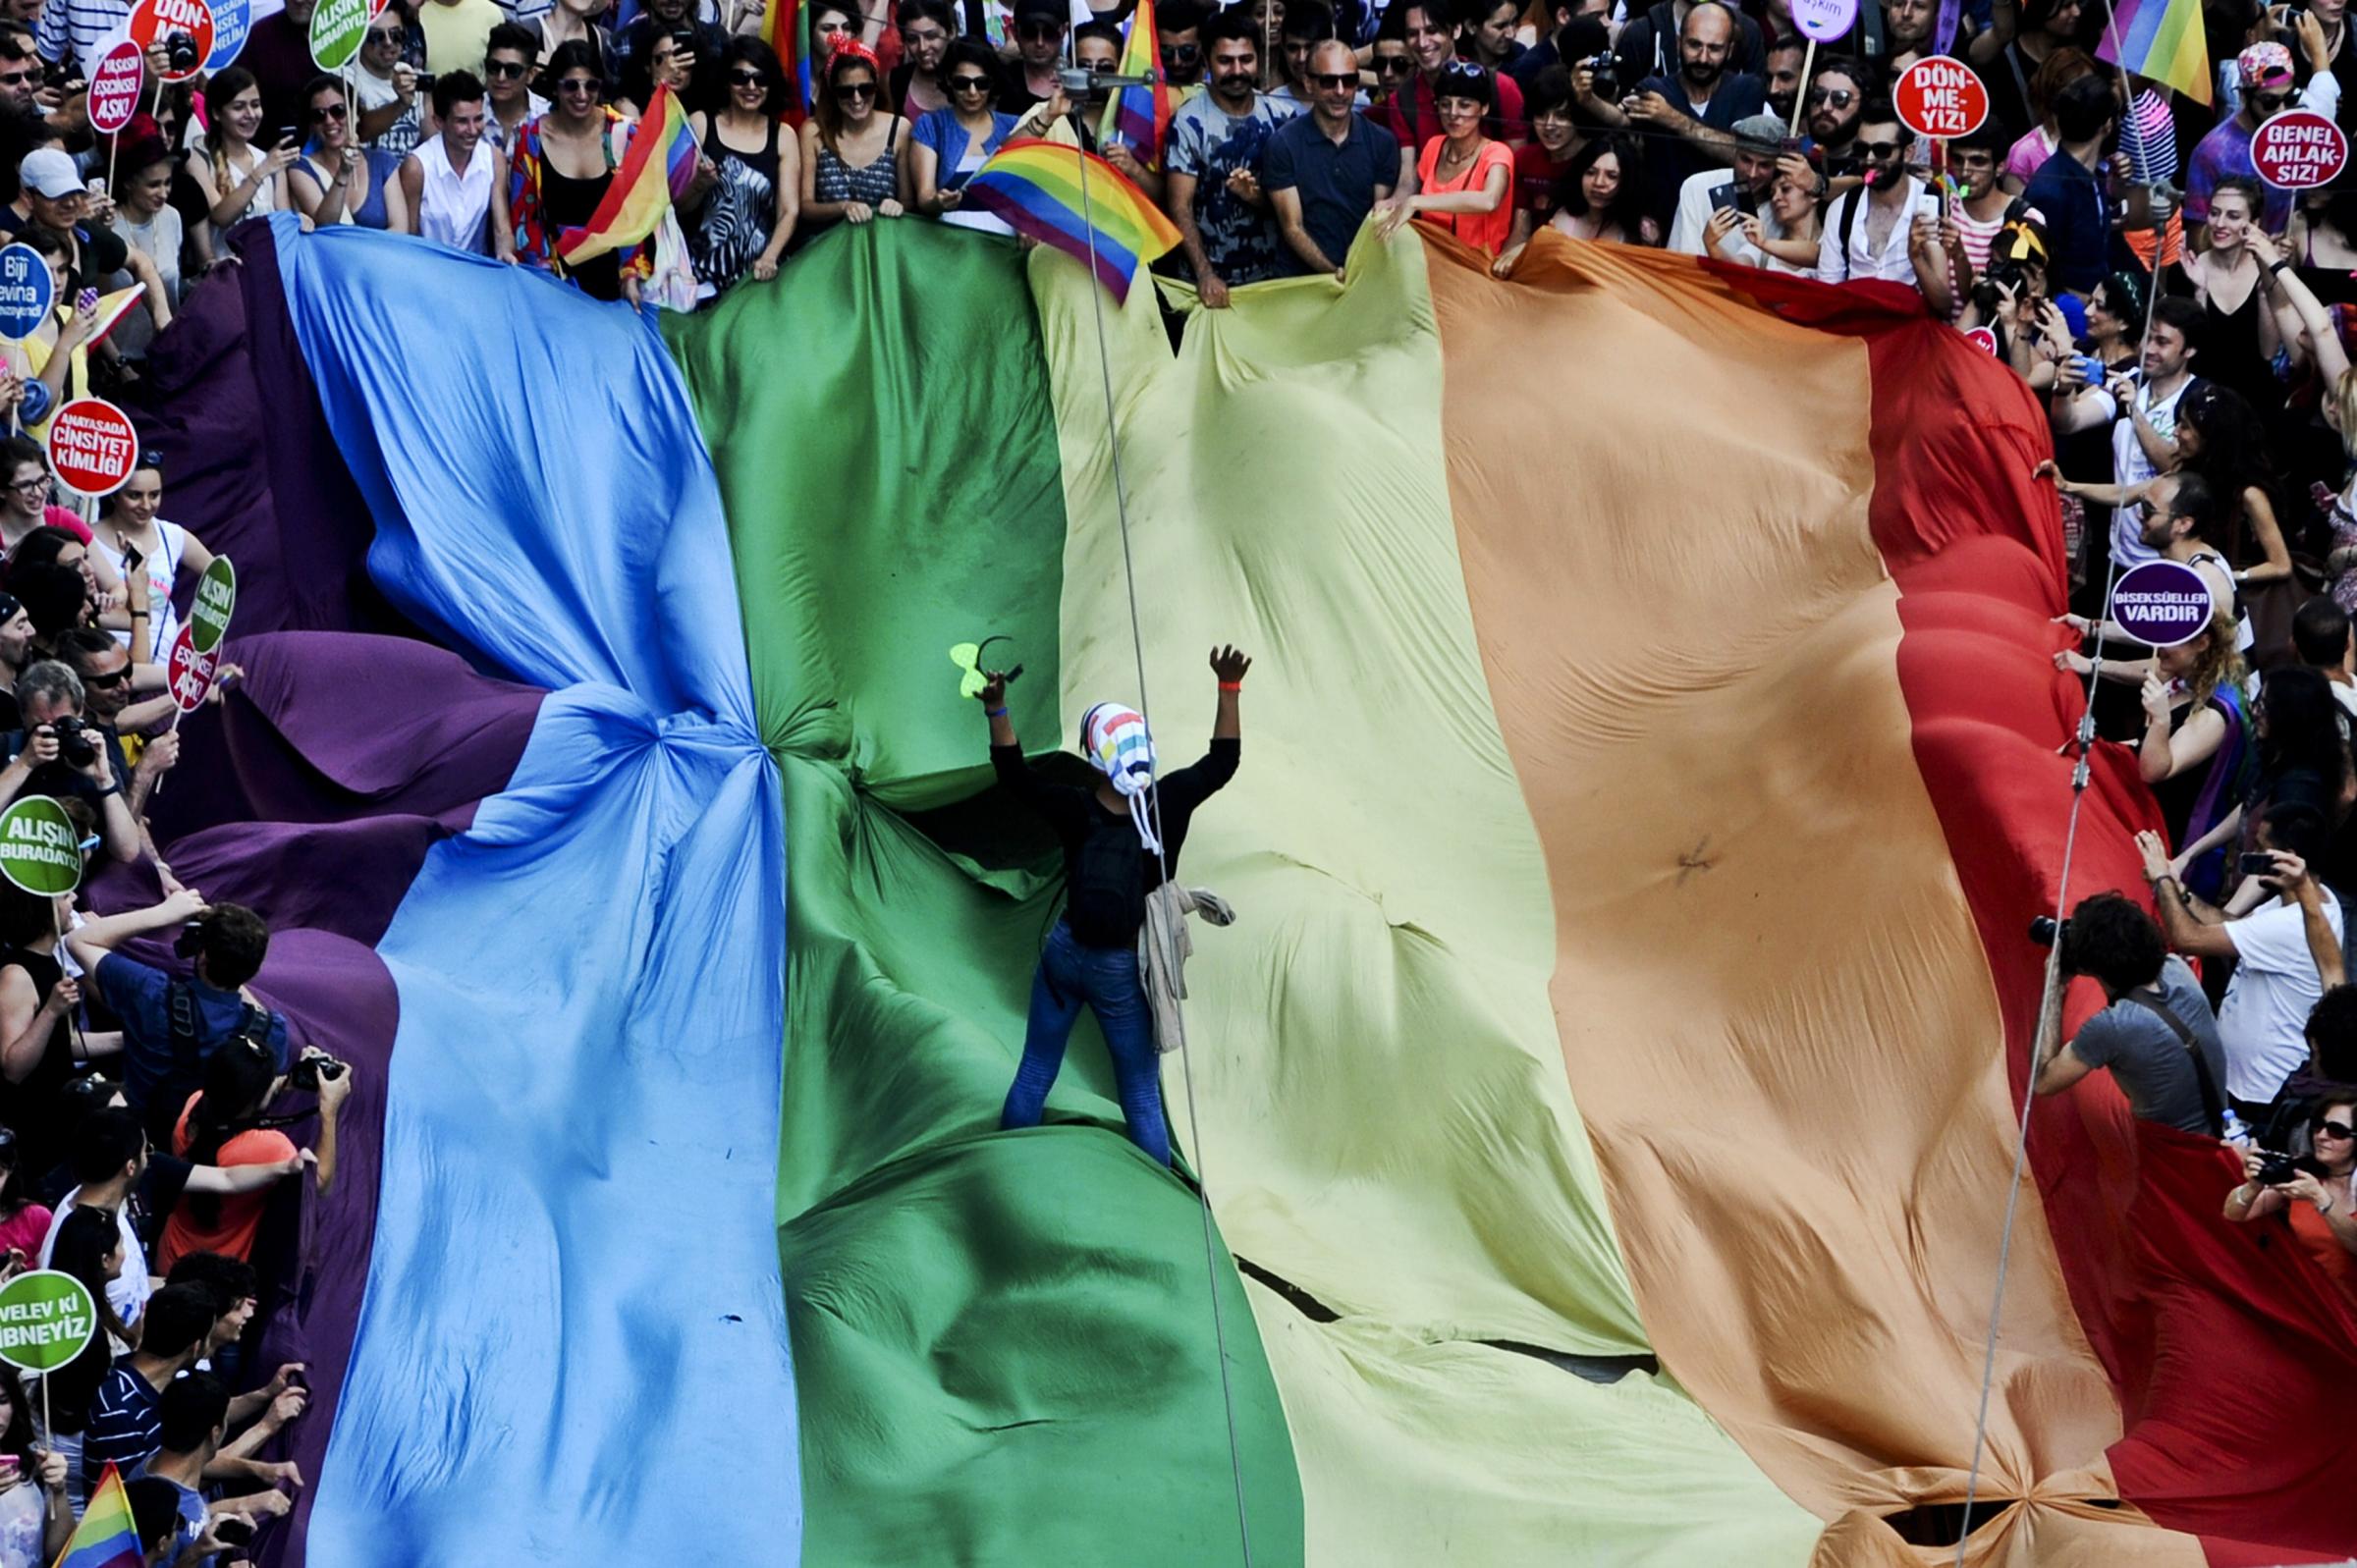 TURKEY-HOMOSEXUALITY-RIGHTS-GAY-PRIDE